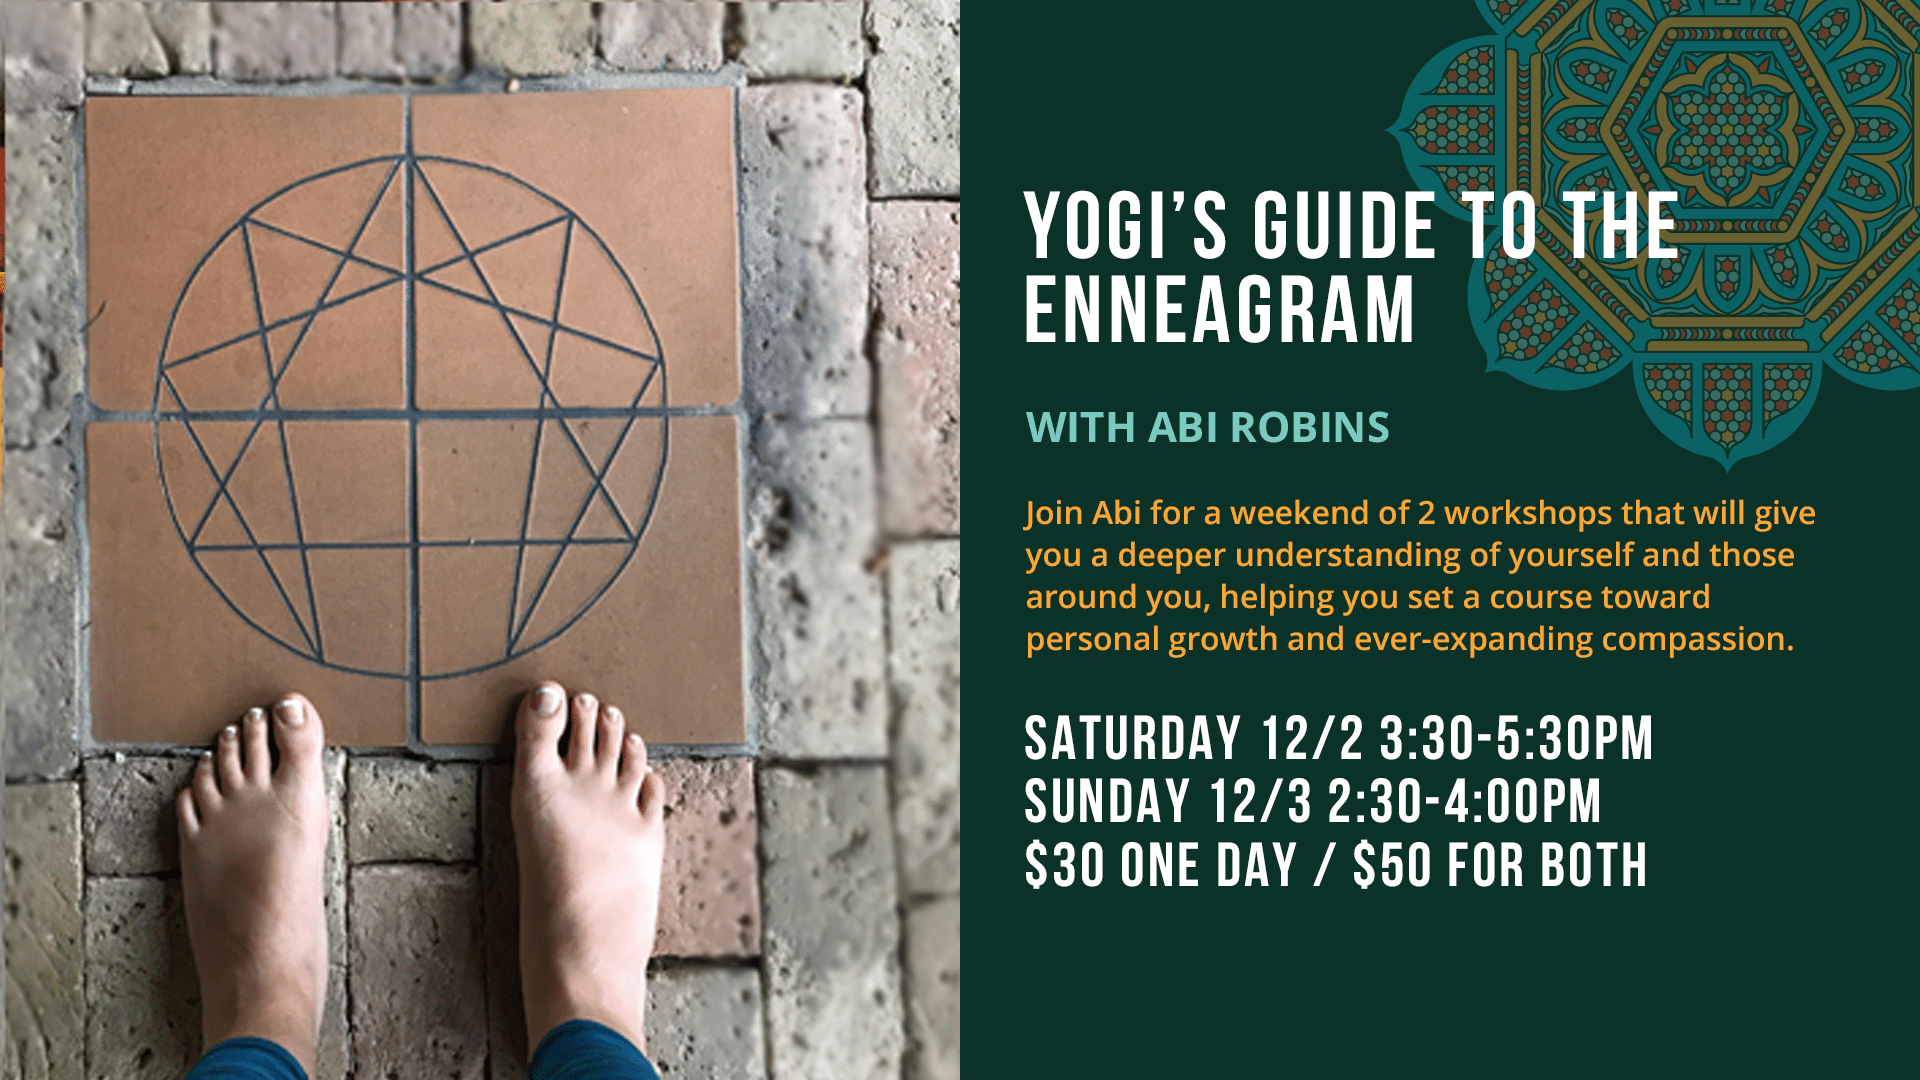 Yogi's Guide to the Enneagram